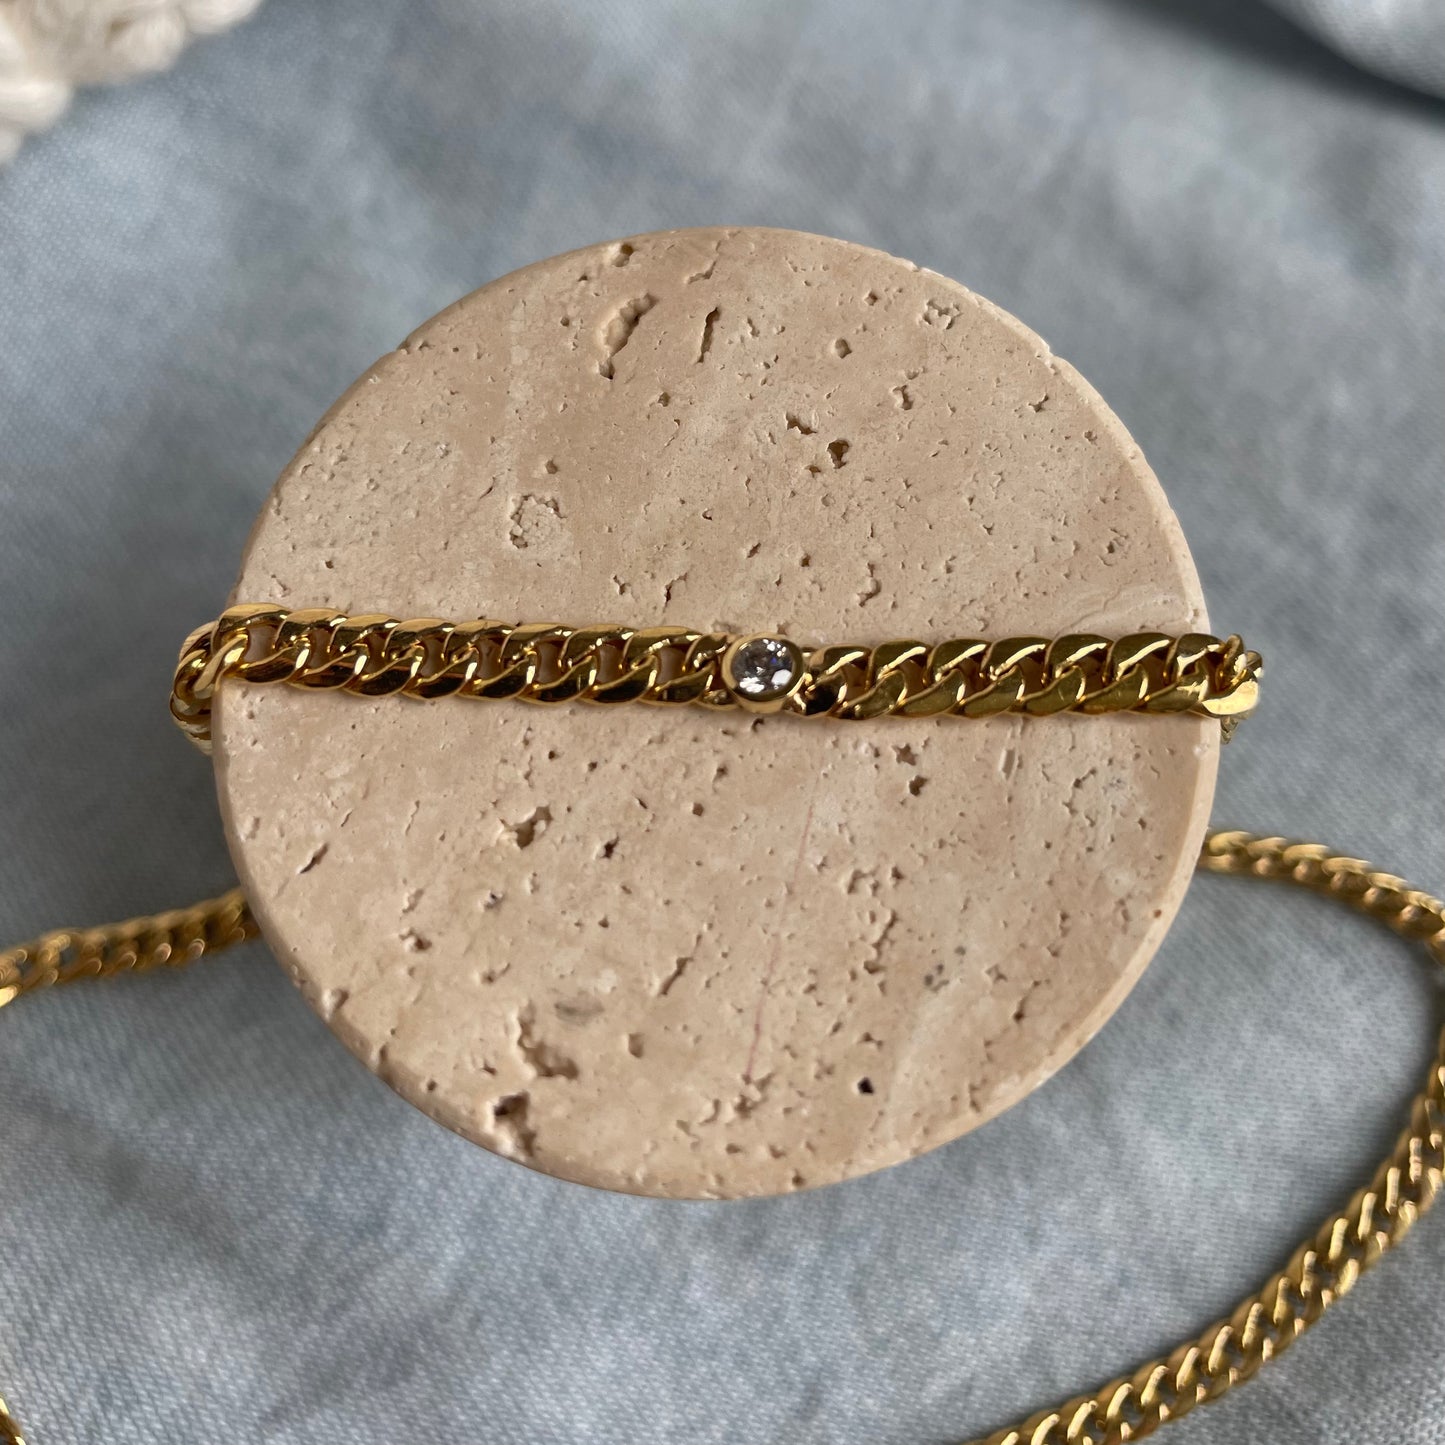 18-carat Curb Chain Single Diamond Necklace - - Jewelry - Goldie Paris Jewelry - Bezel Necklace